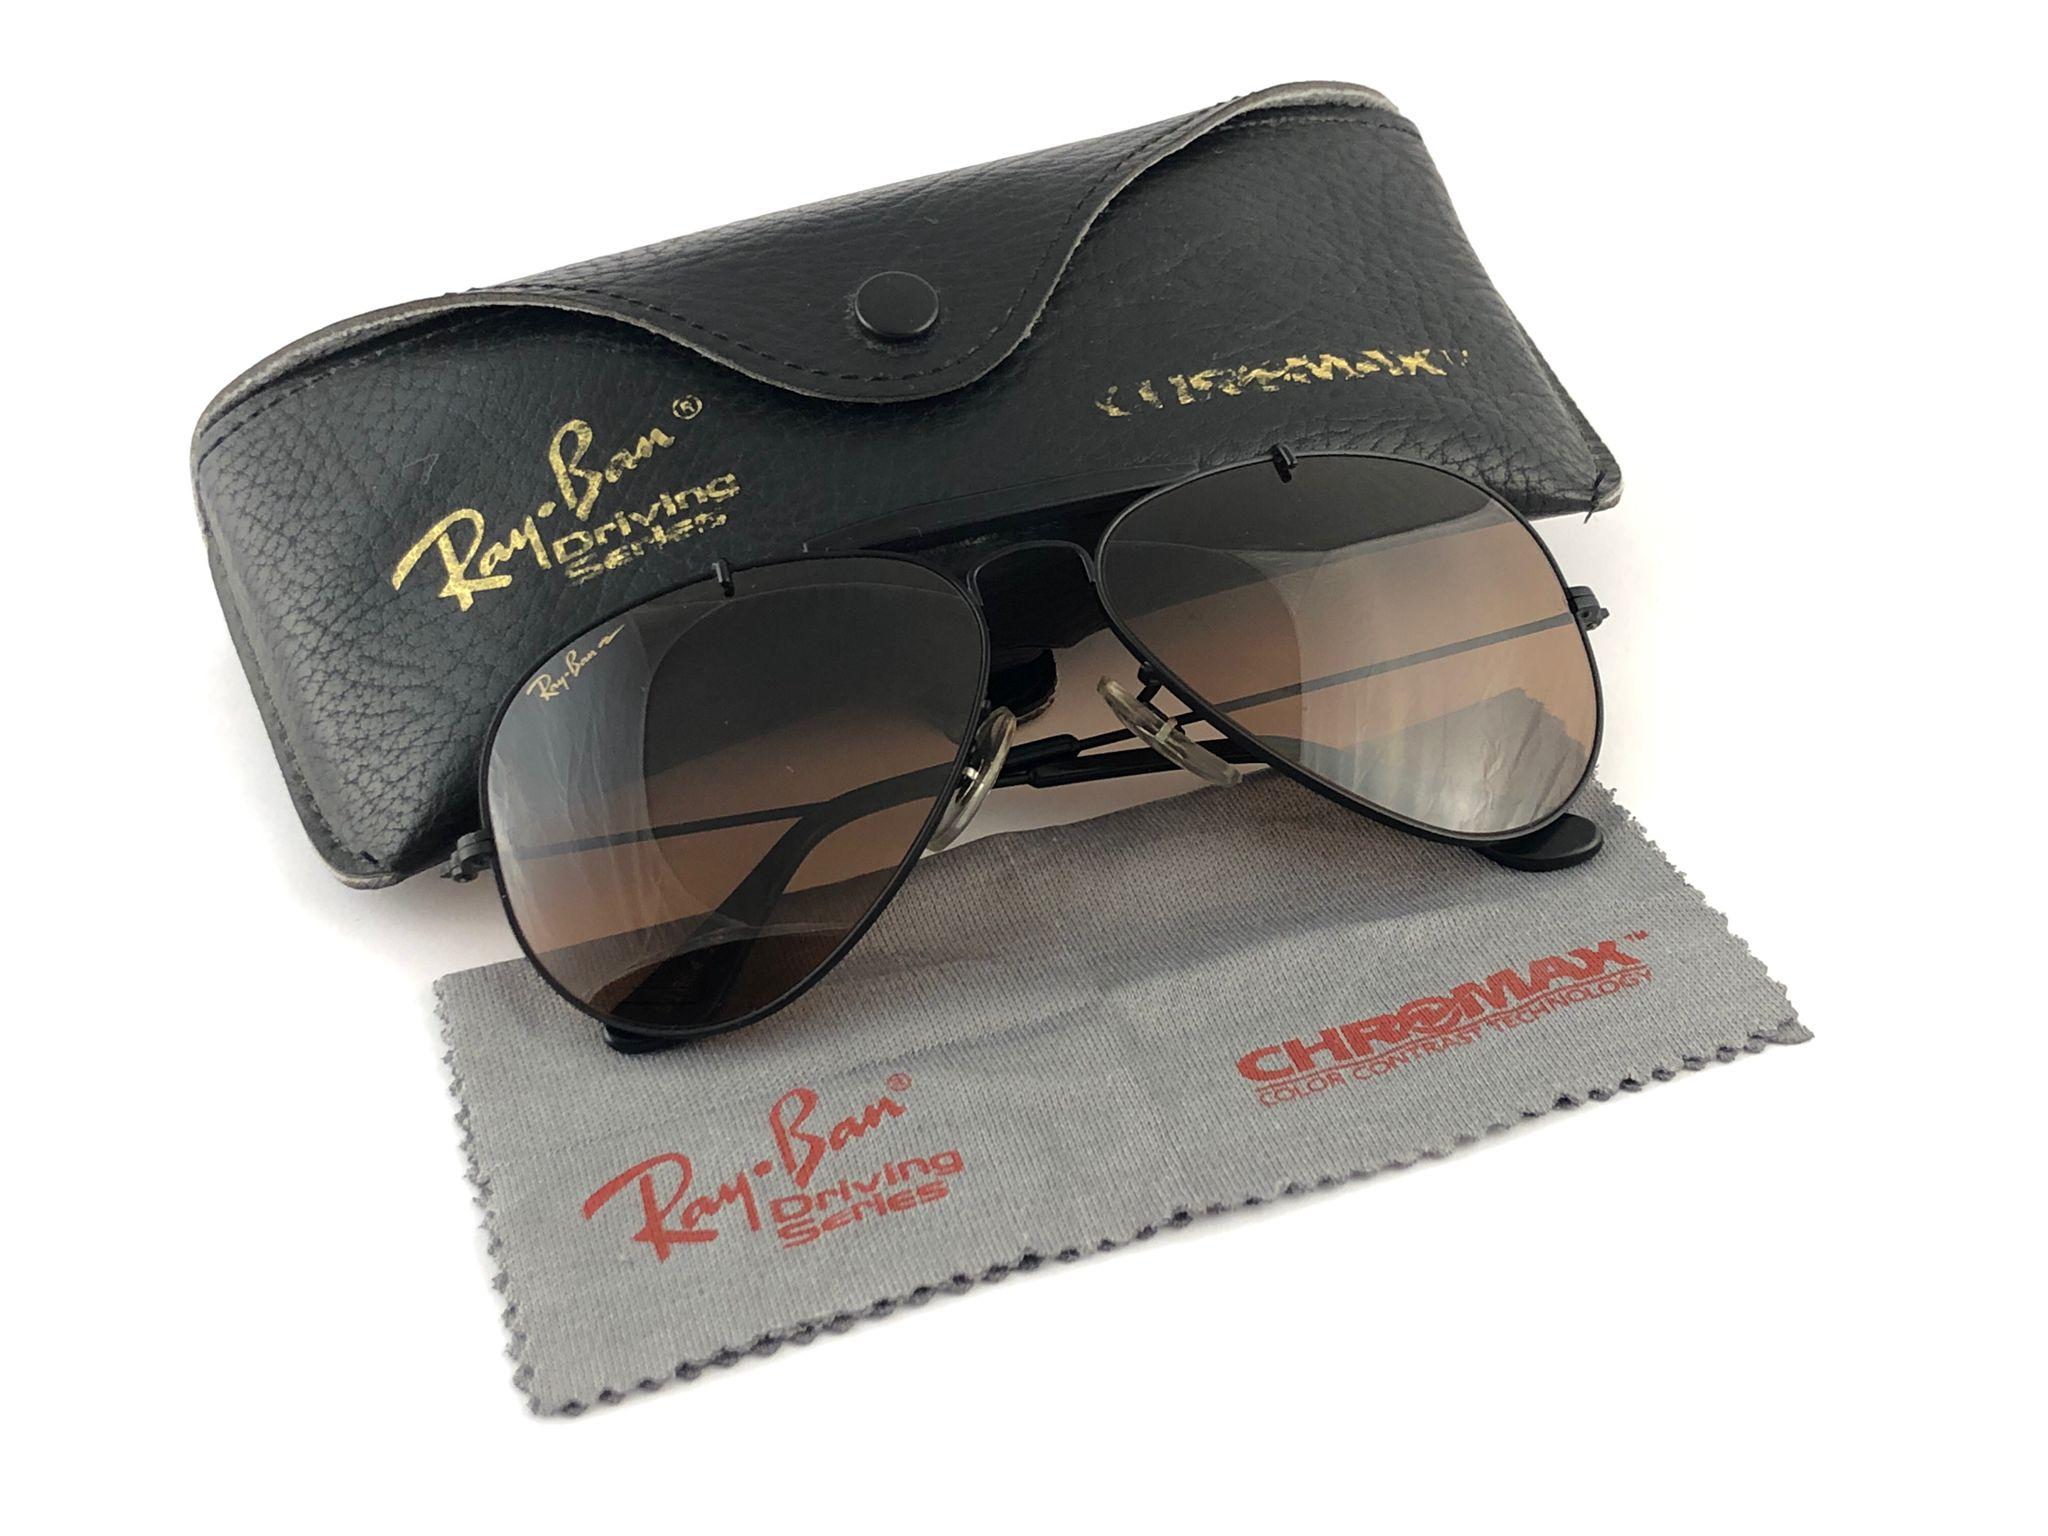 New Ray Ban Chromax 58Mm Outdoorsman B&L Collectors Item USA Sunglasses 5